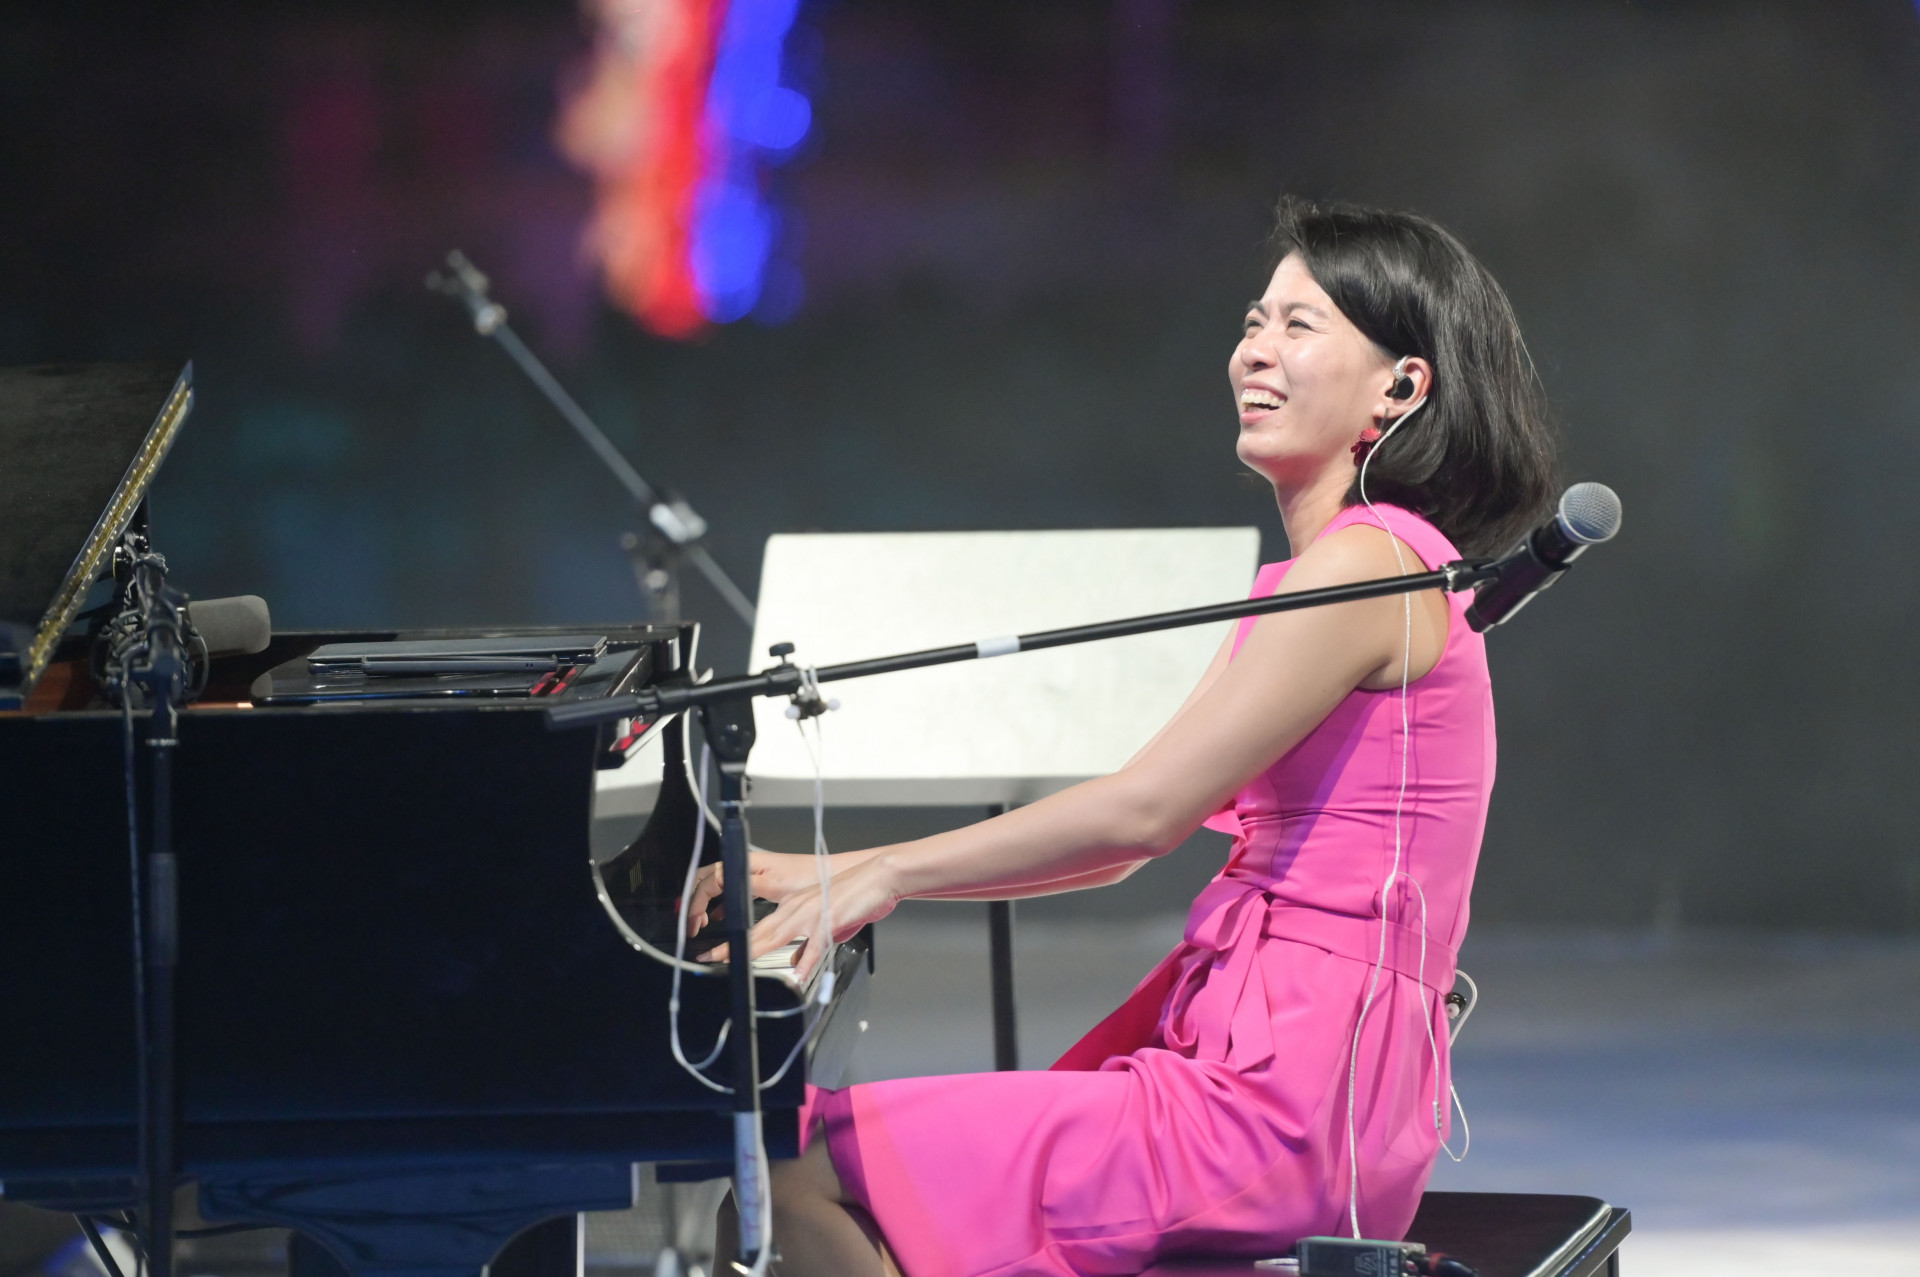 Performance of piano artist Amanda Lee

